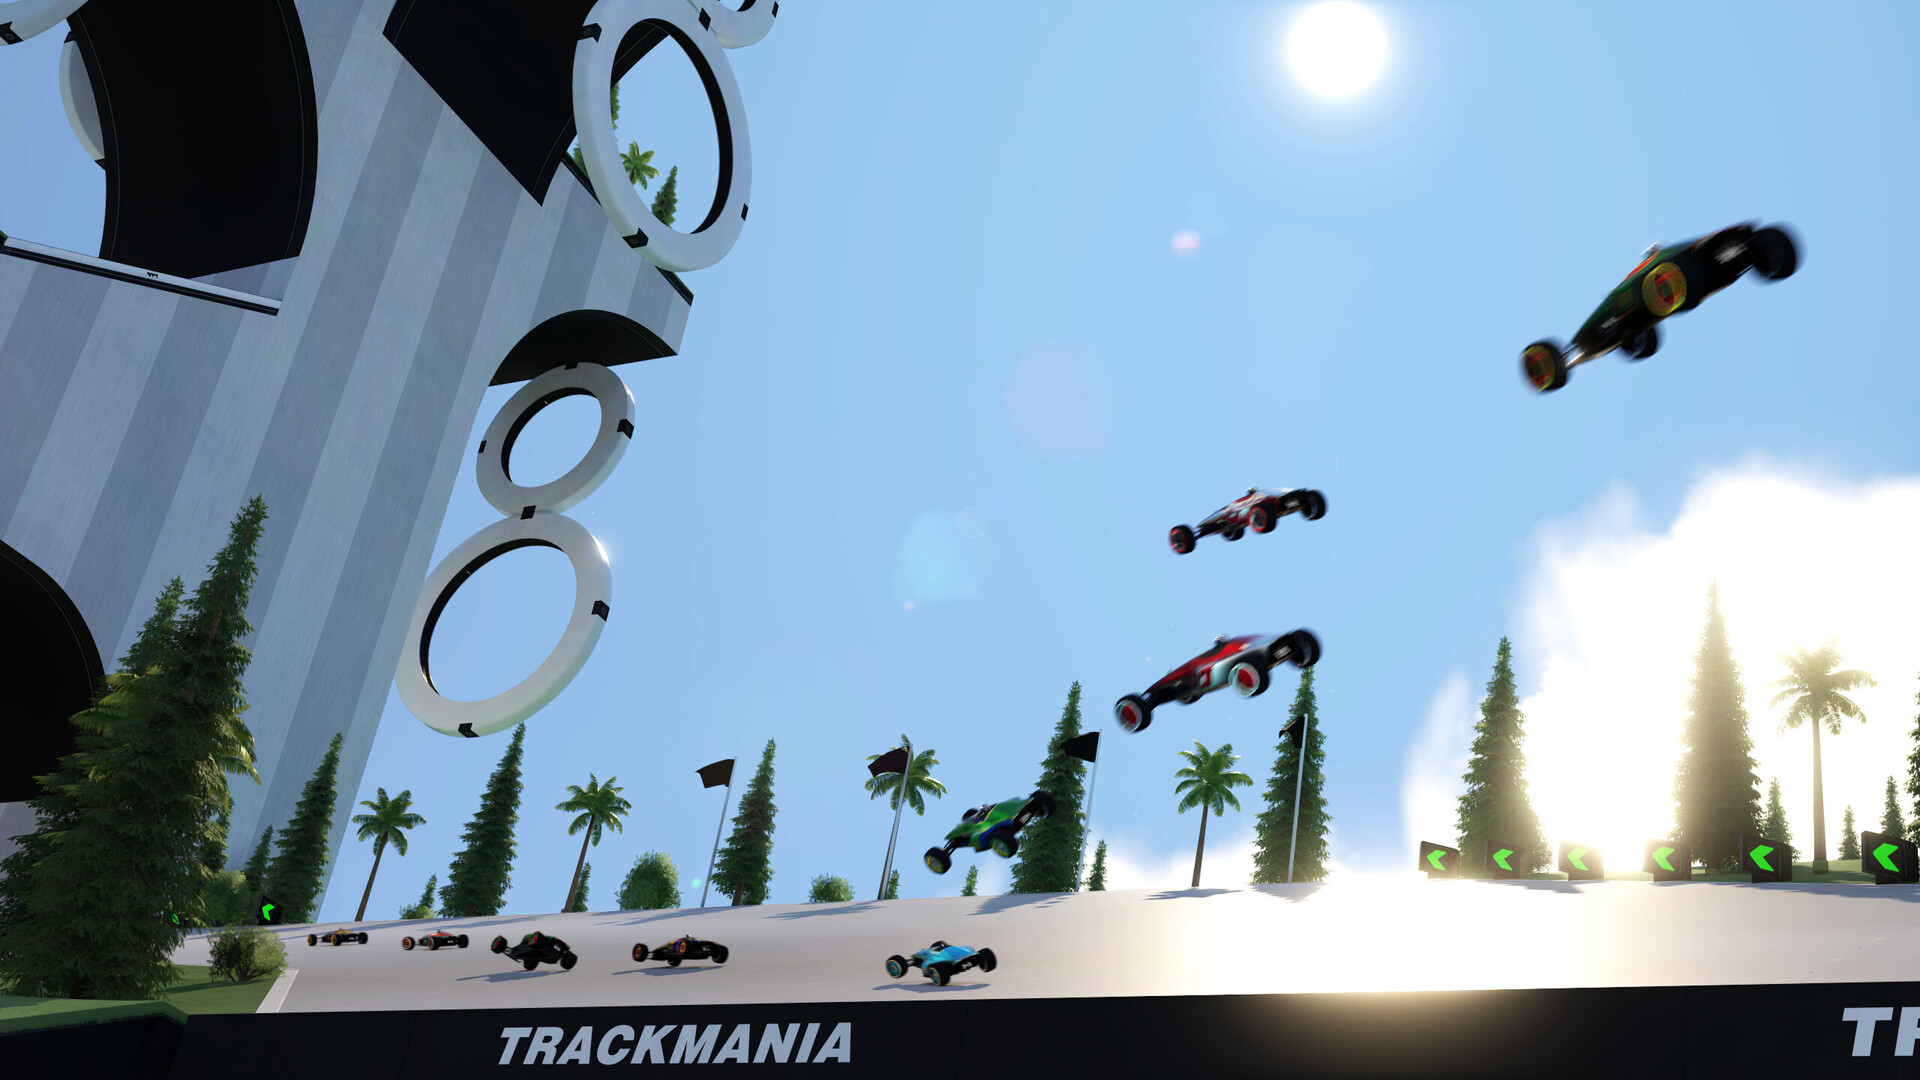 Trackmania -  Standard Access - 1 Year DLC EU XBOX One / Xbox Series X,S CD Key